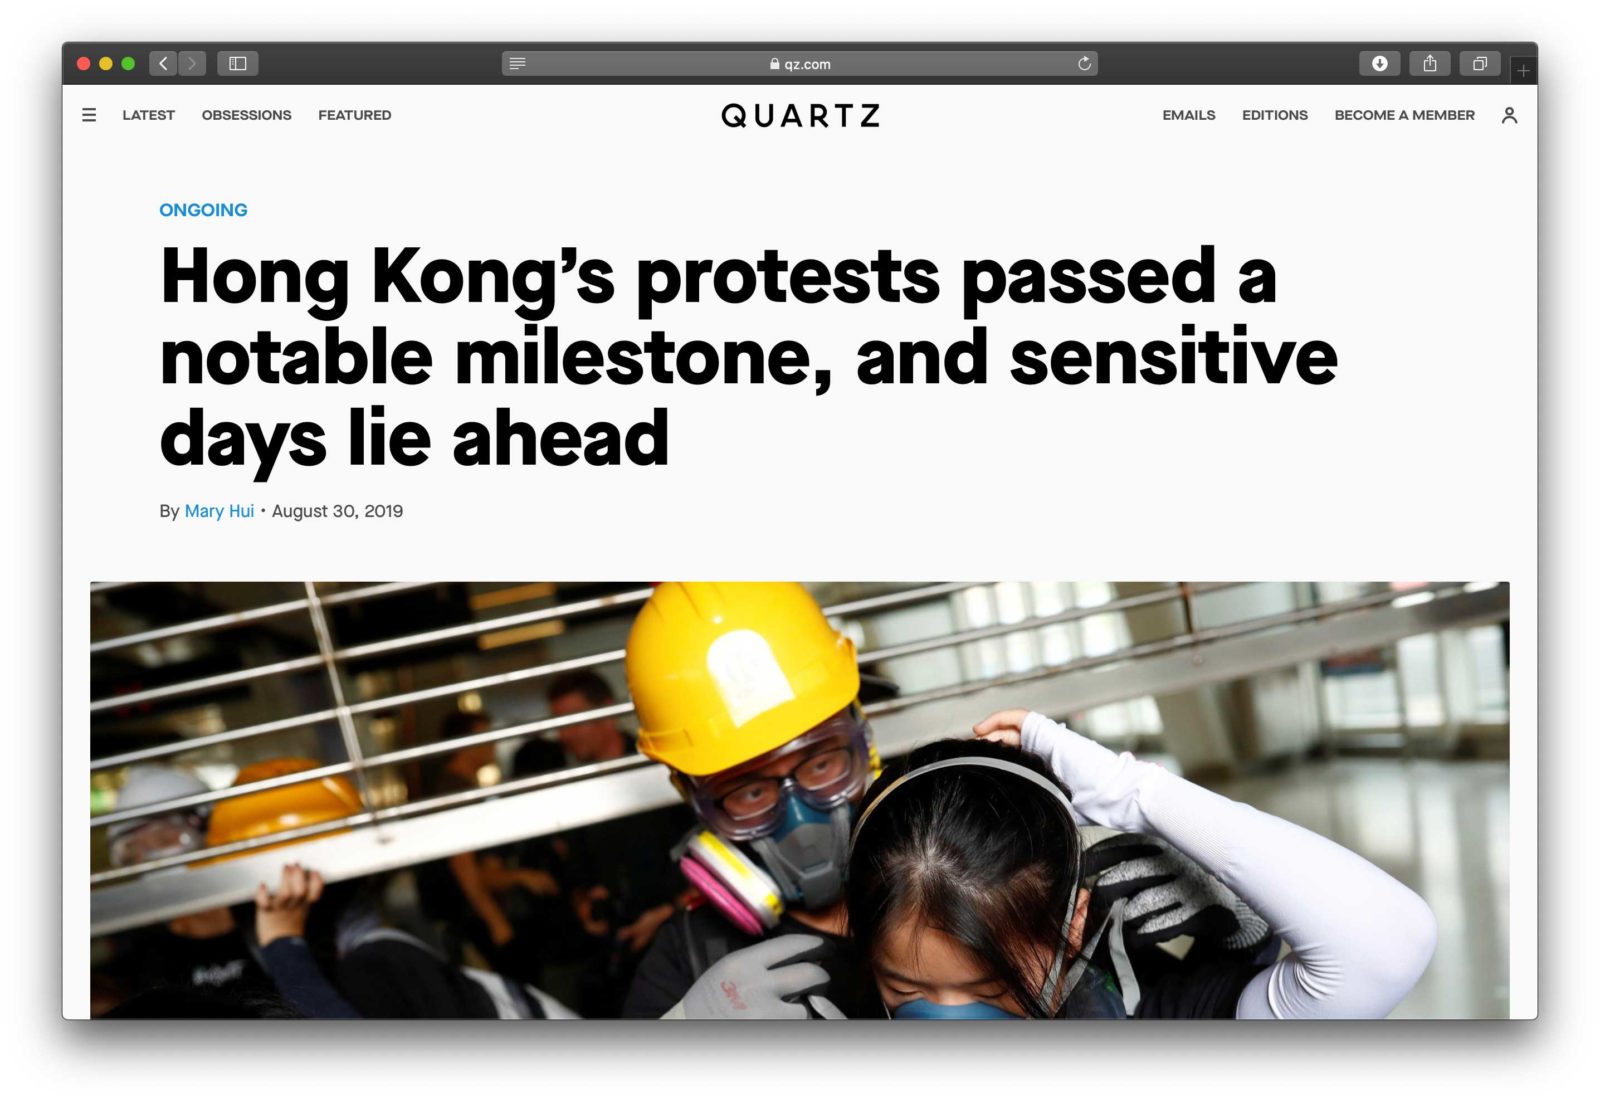 L’app Quartz rimossa dall’App Store cinese perché diffondeva notizie sulle proteste di Hong Kong